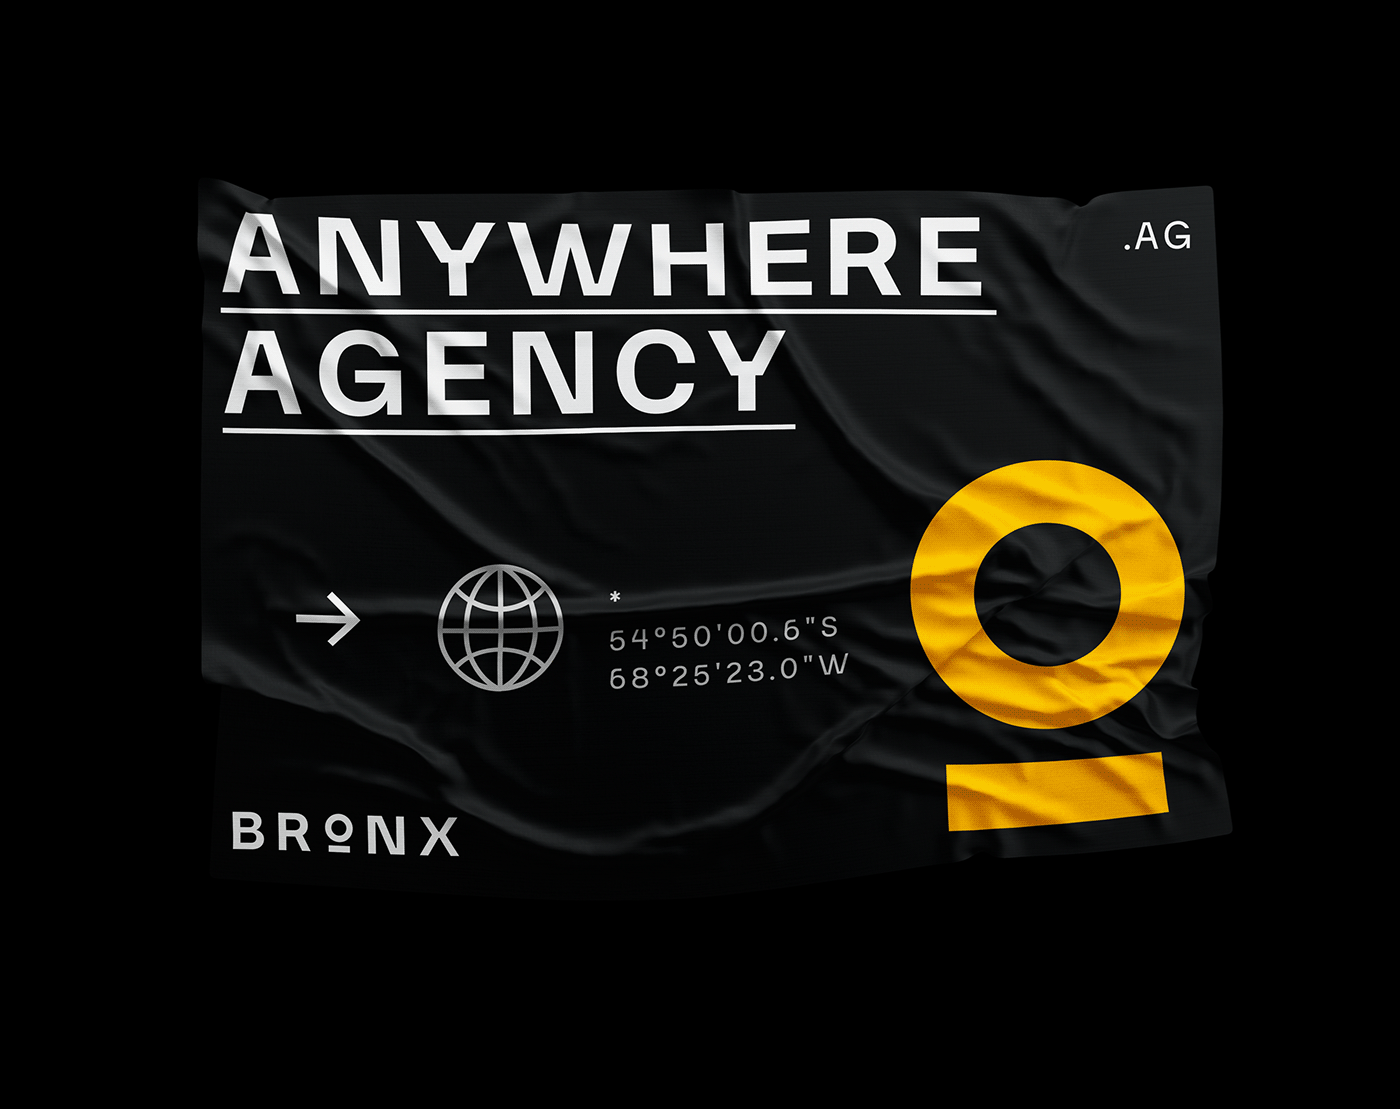 agency anywhere Bronx identidade visual marca rebranding